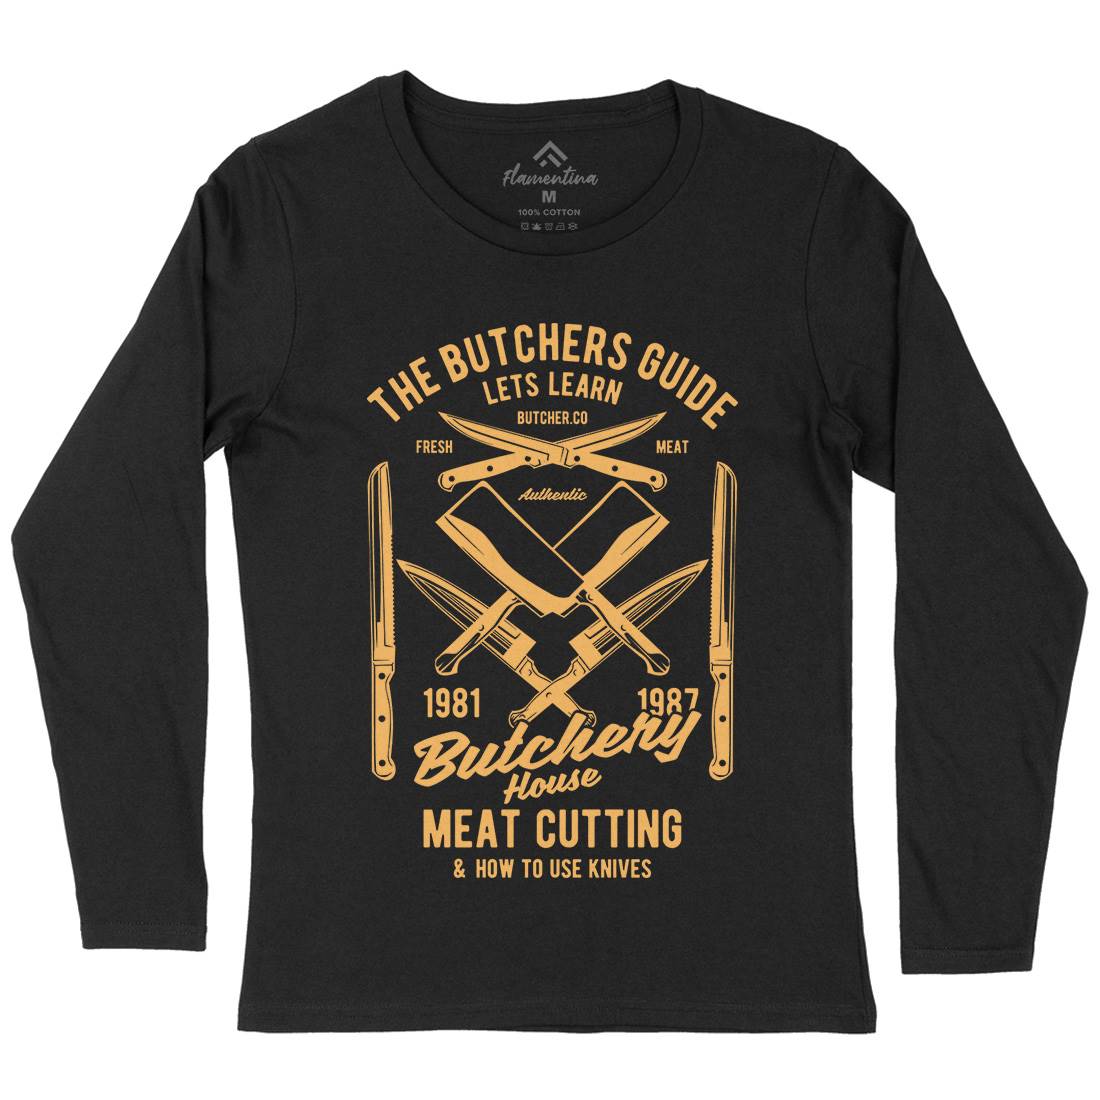 Butchery House Womens Long Sleeve T-Shirt Retro B190